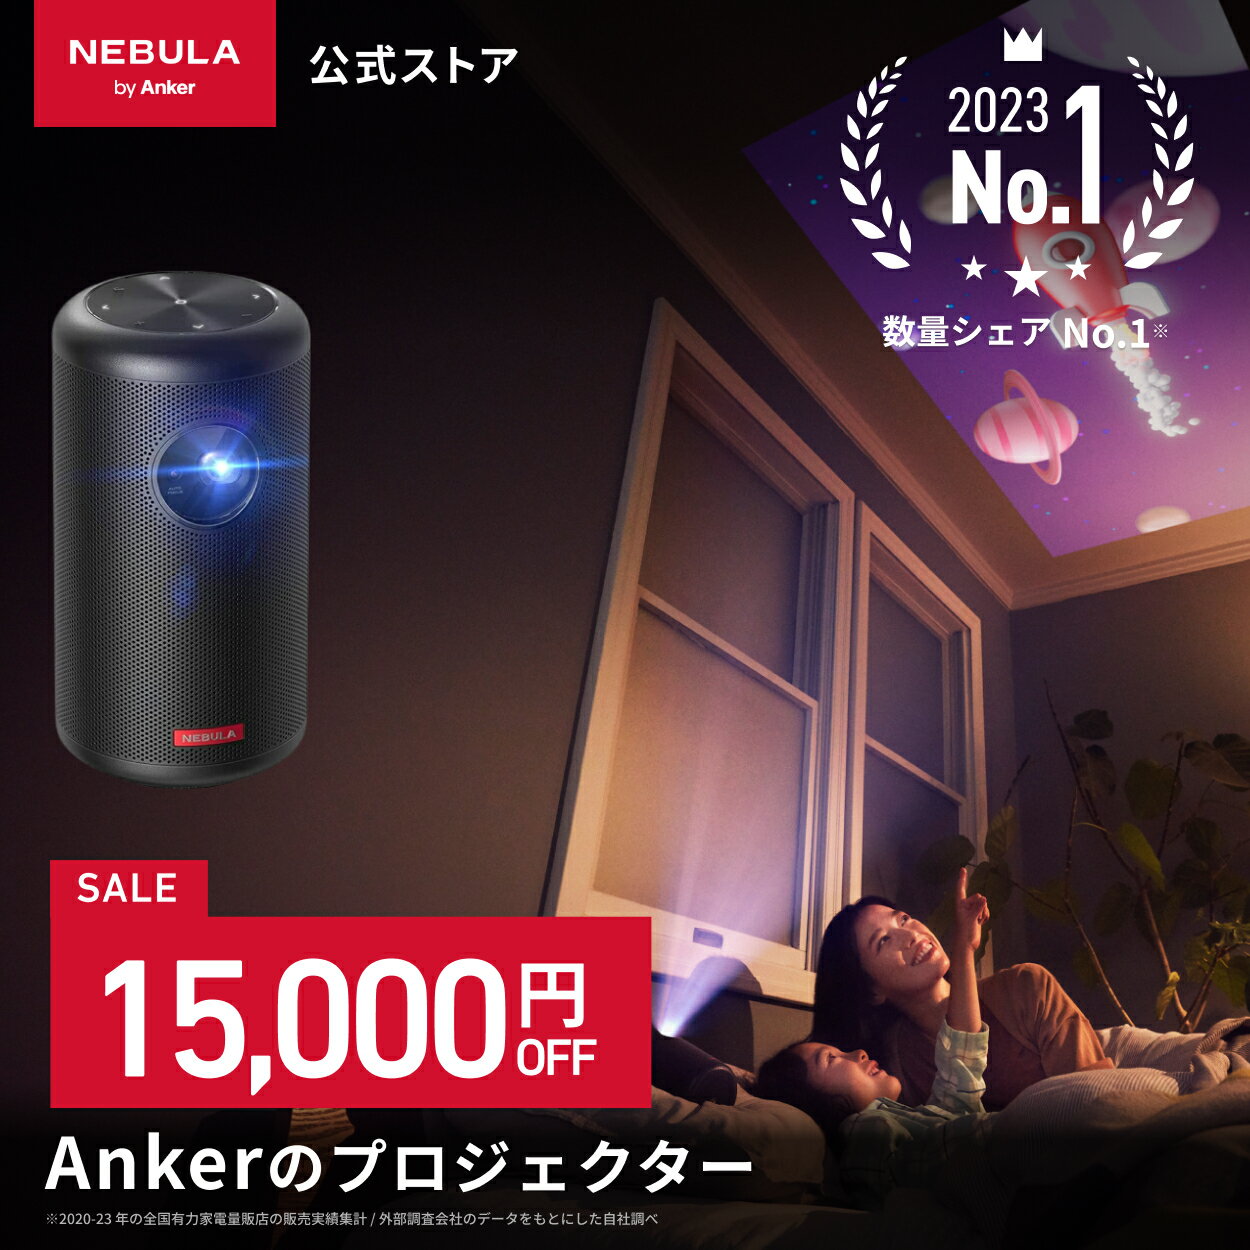 Anker Nebula Capsule II 世界初 Android TV搭載 モバイルプロジェクター 【200 ANSIルーメン / オートフォーカス機能 / 8W スピーカー】